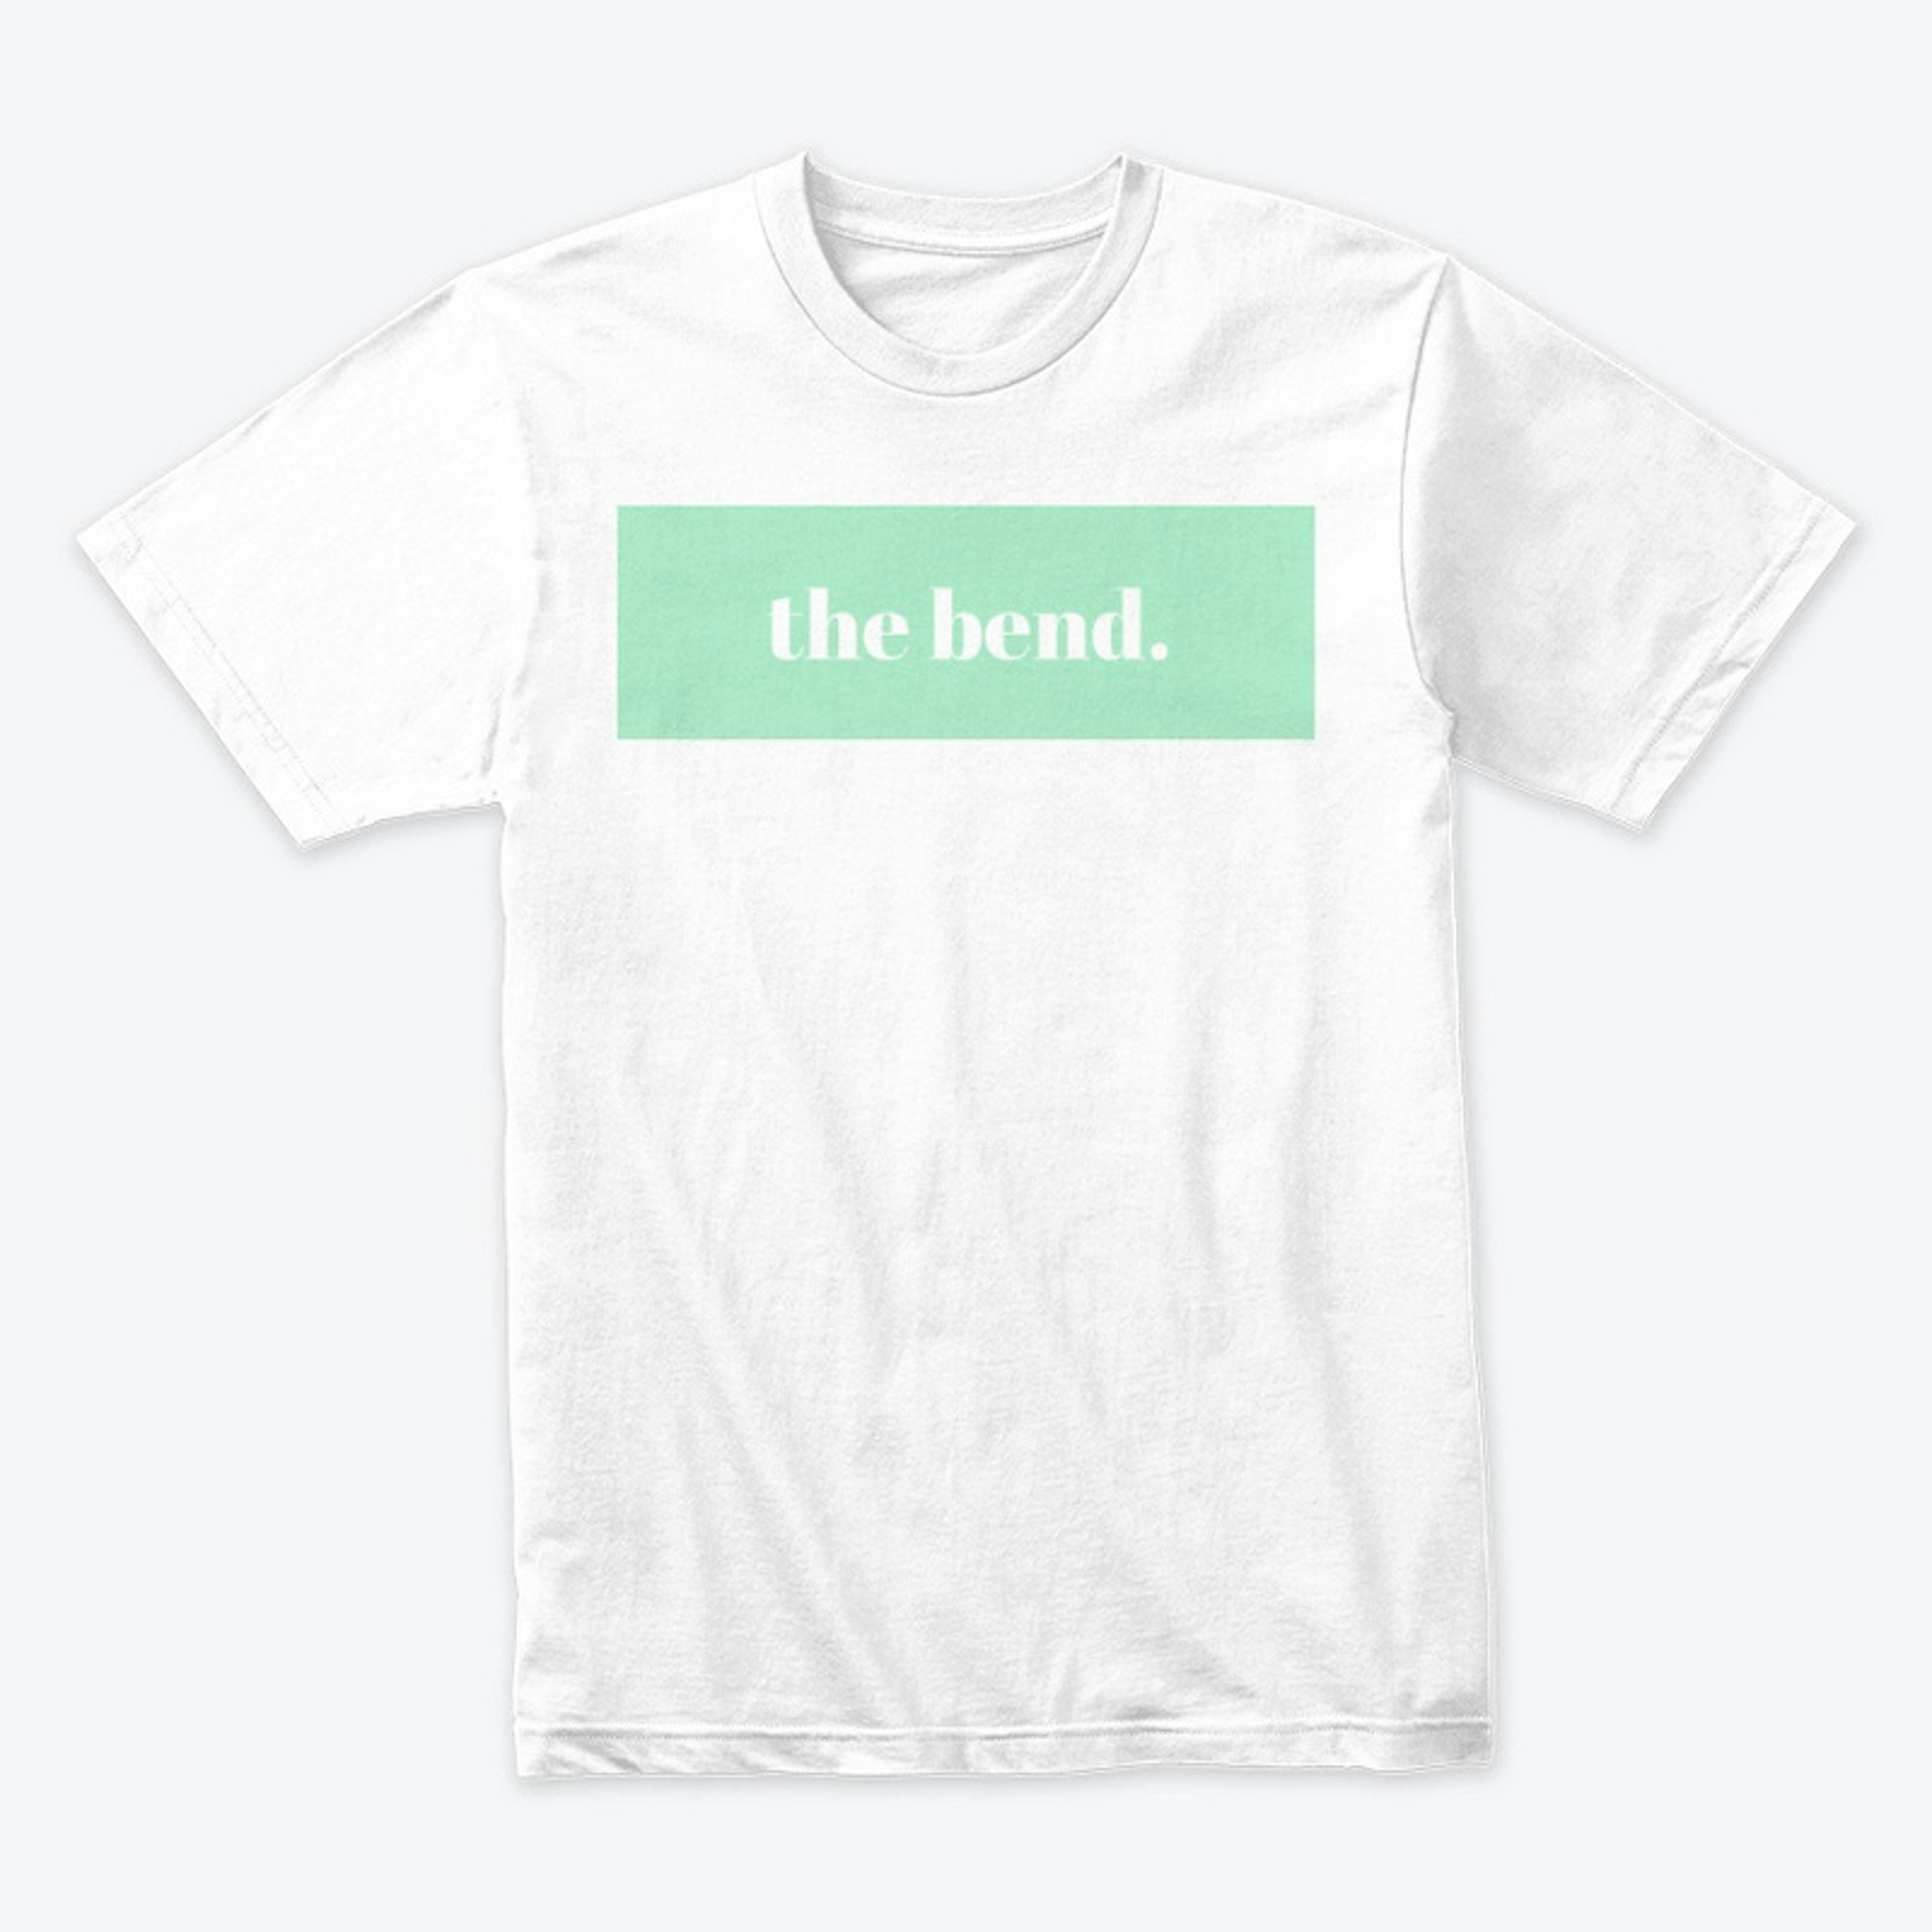 "the bend." Box logo (mint green)